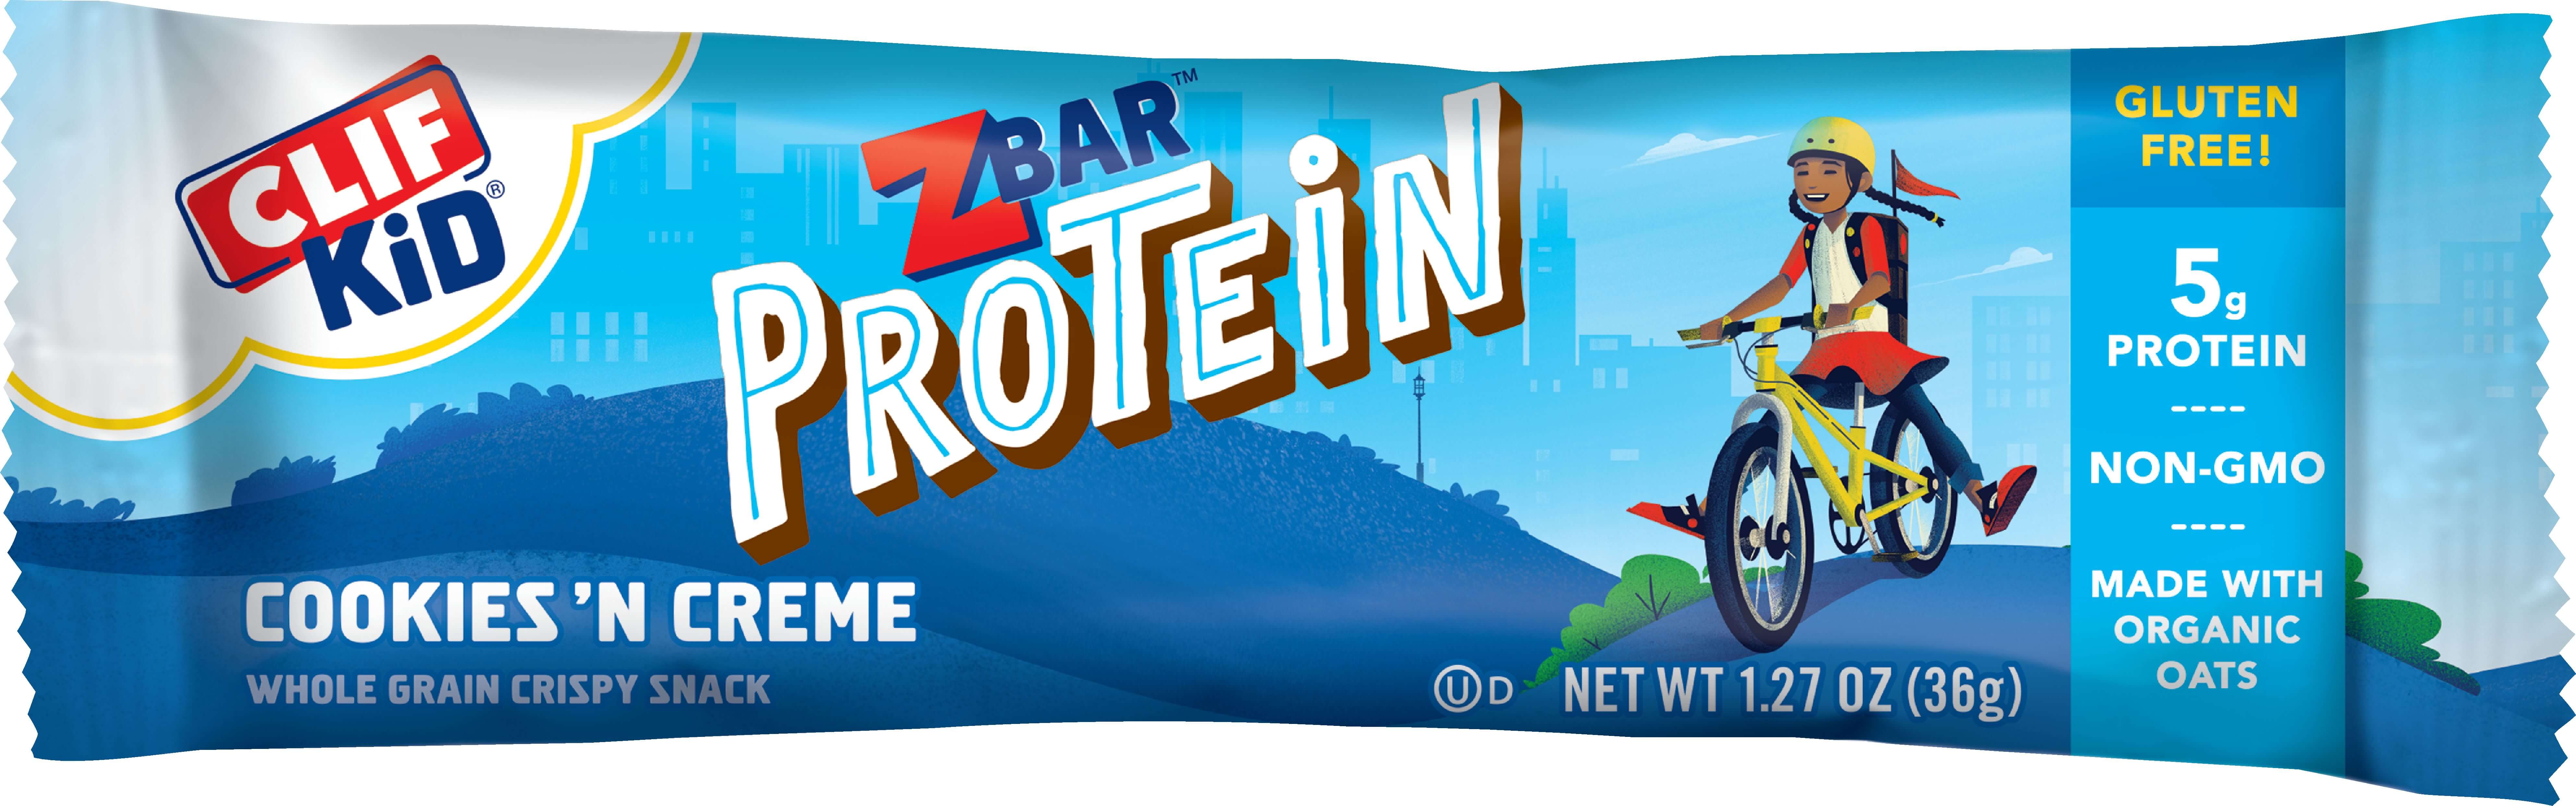 Best Bar for Active Kids: Kid Zbar Protein Cookies 'n Creme 